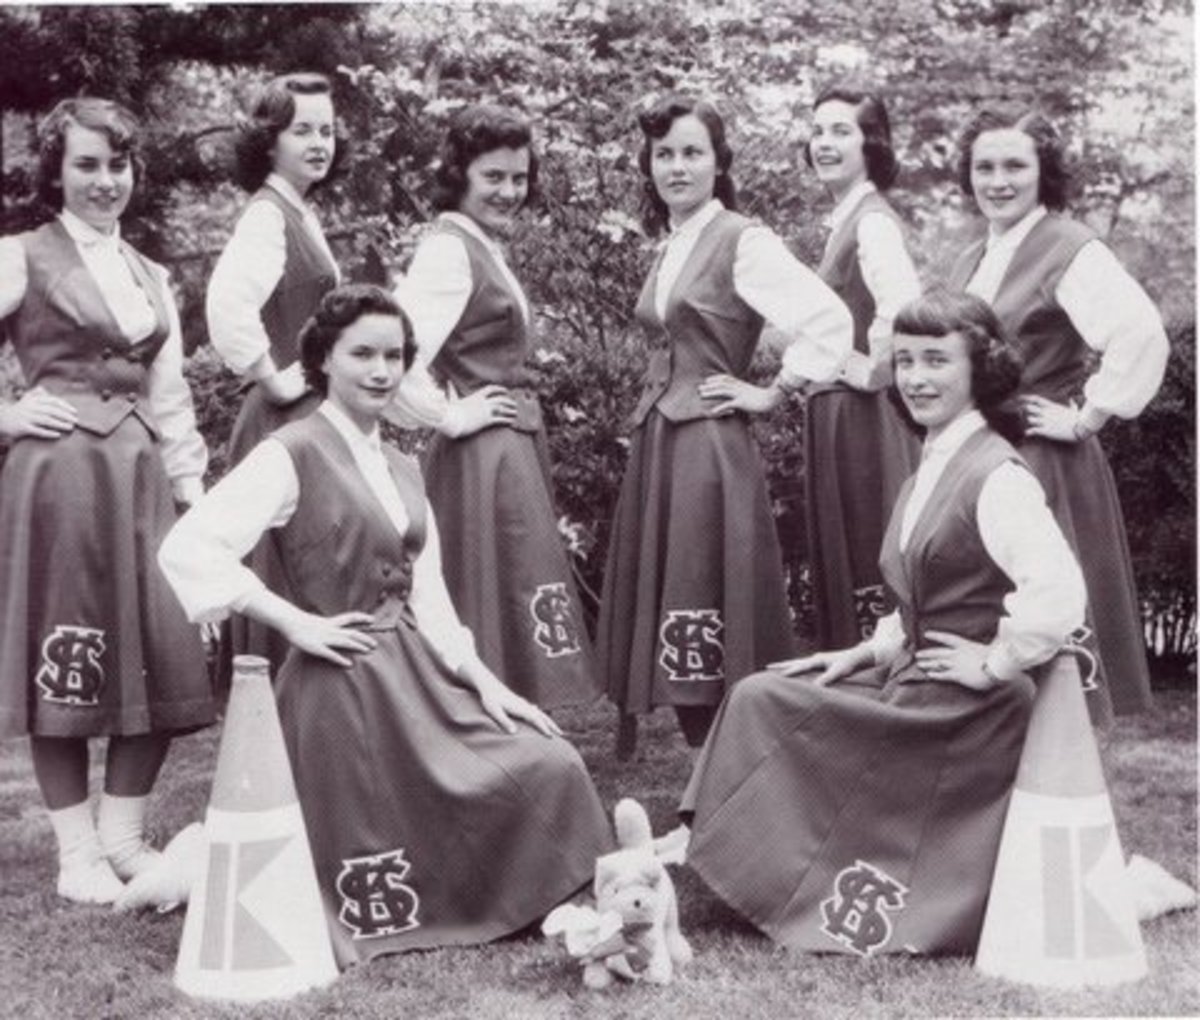 High School Cheerleaders of 1955